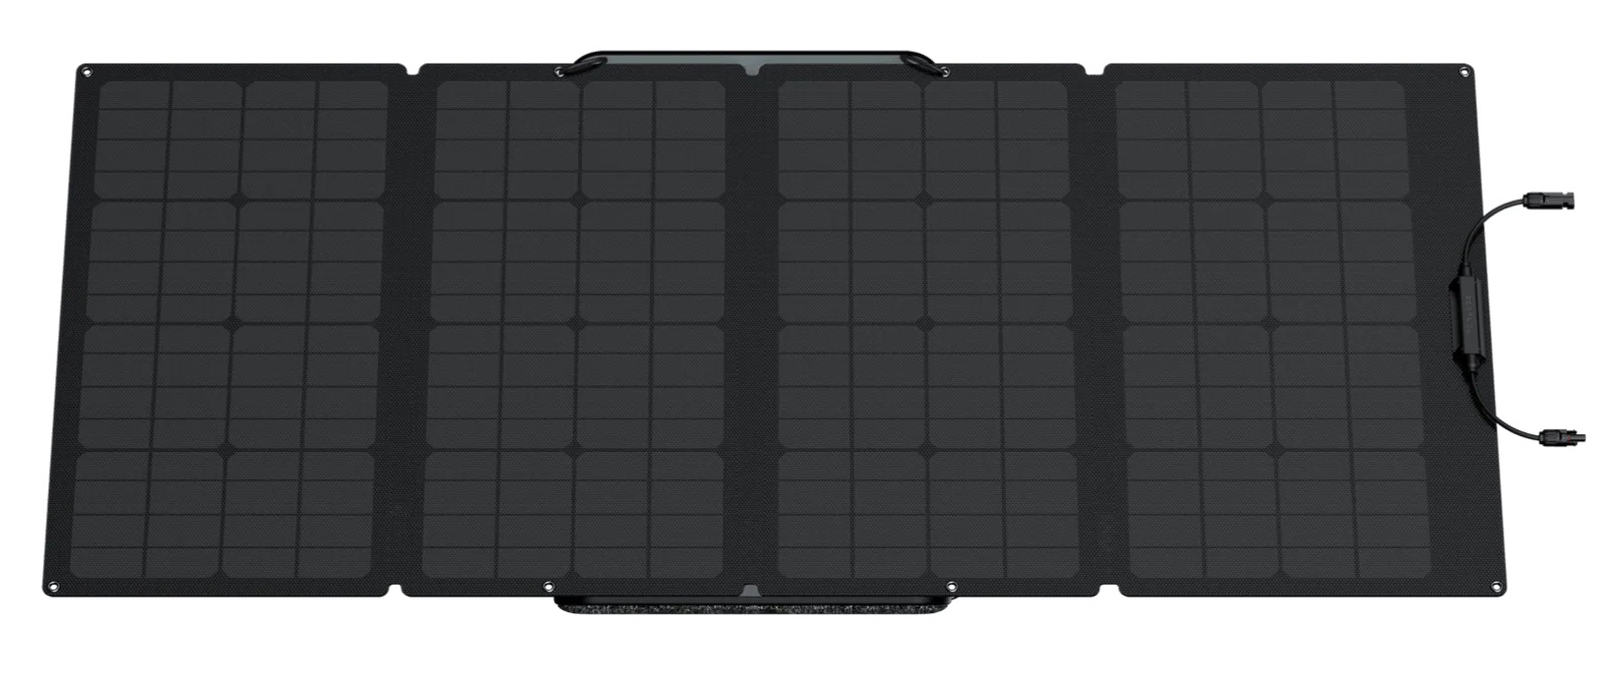 EcoFLow 160W Tragbares Solarpanel Artikel Nr. 44-600-1005